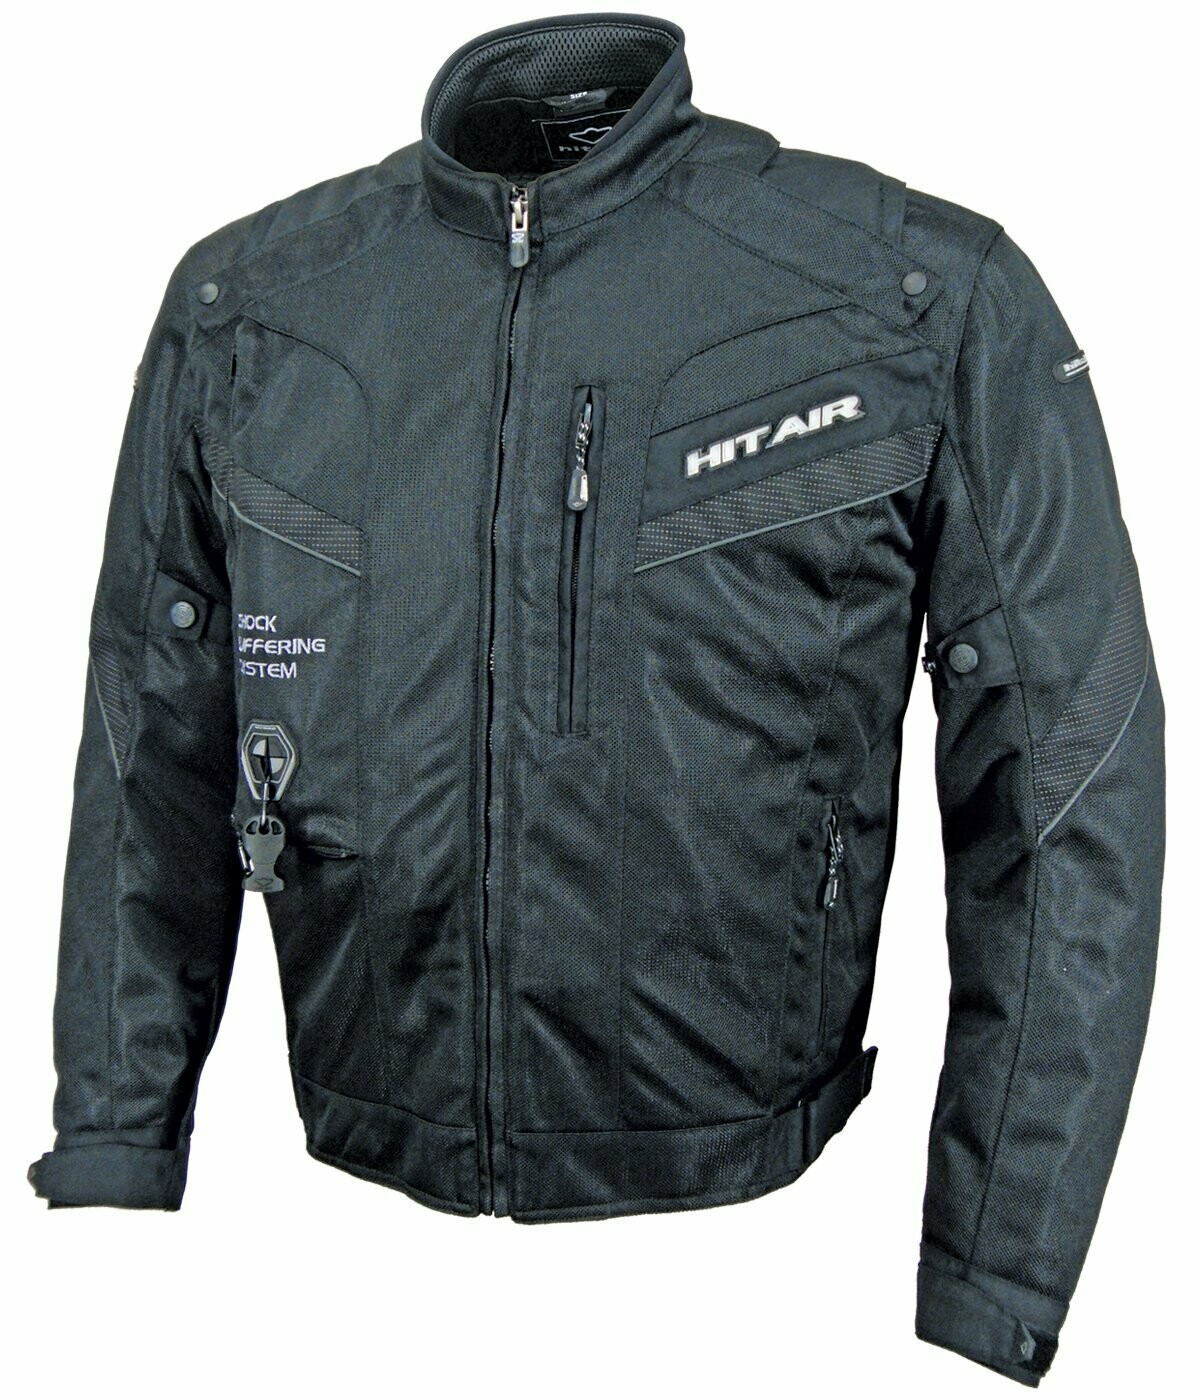 MX7 - full mesh sports motorcycle jacket. V7